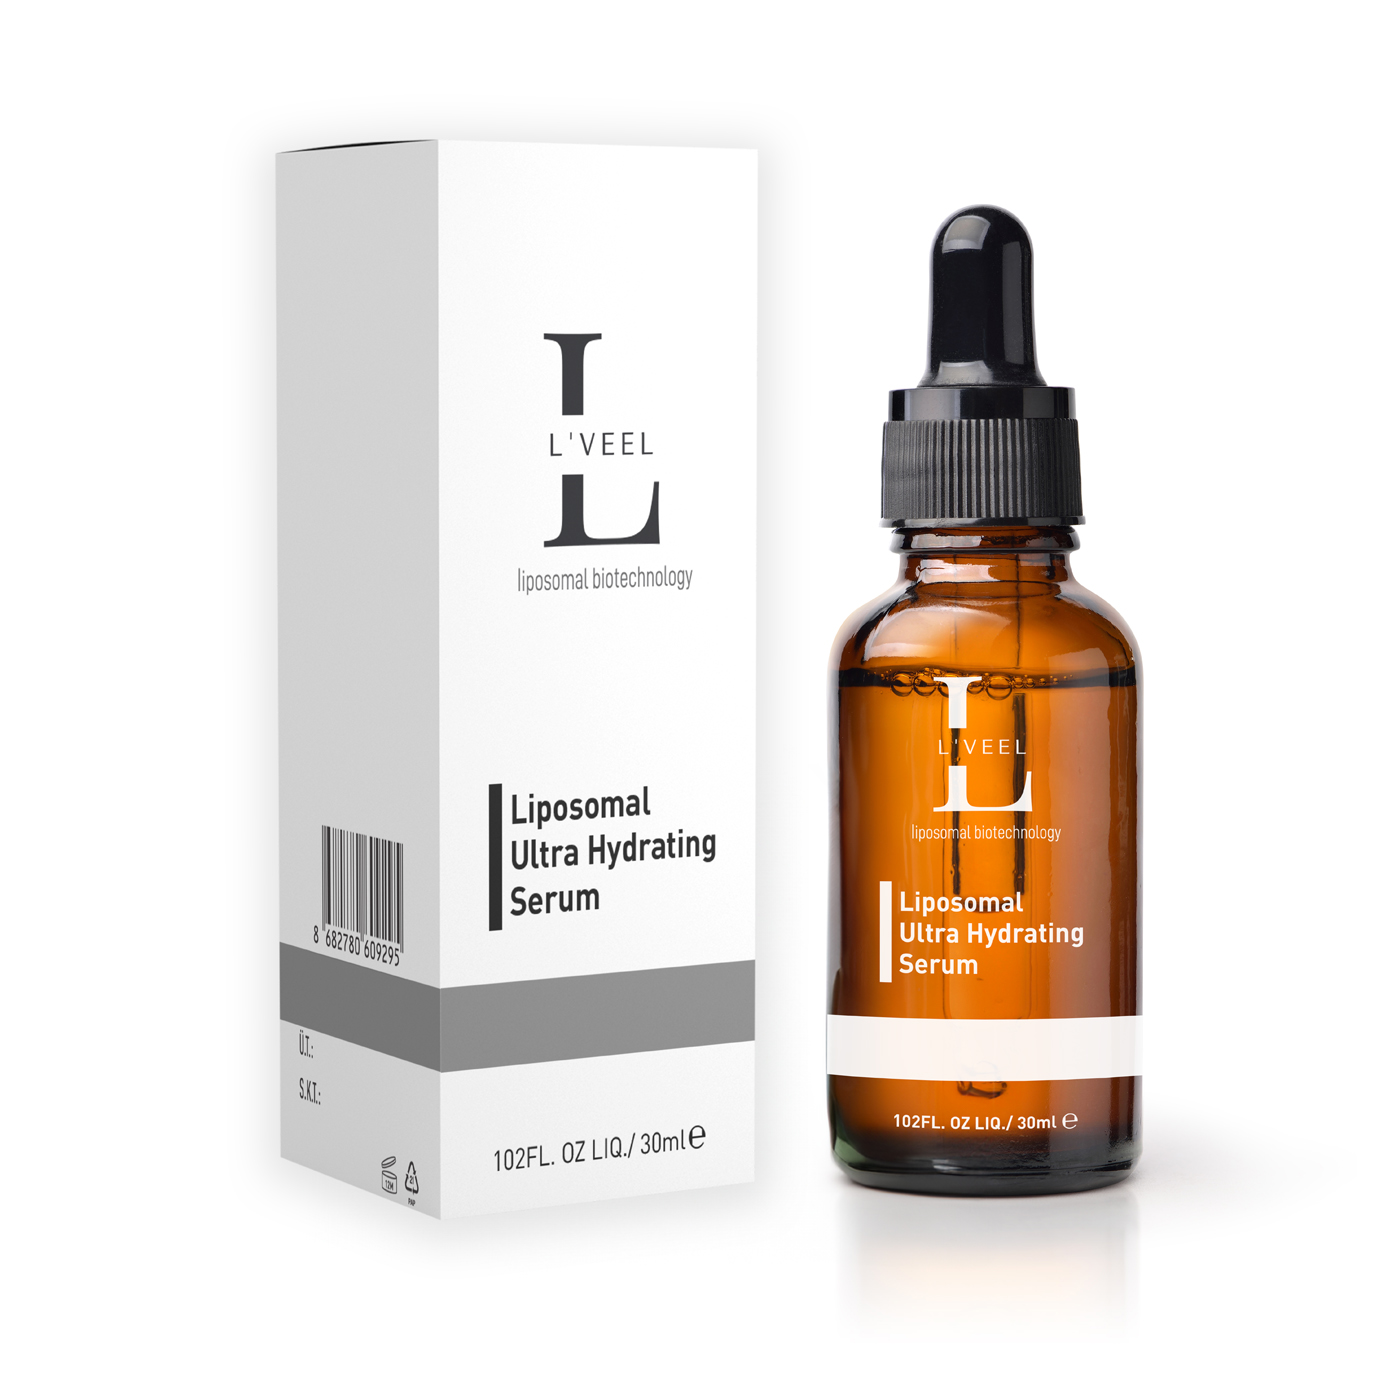 Liposomal Ultra Hydrating Serum